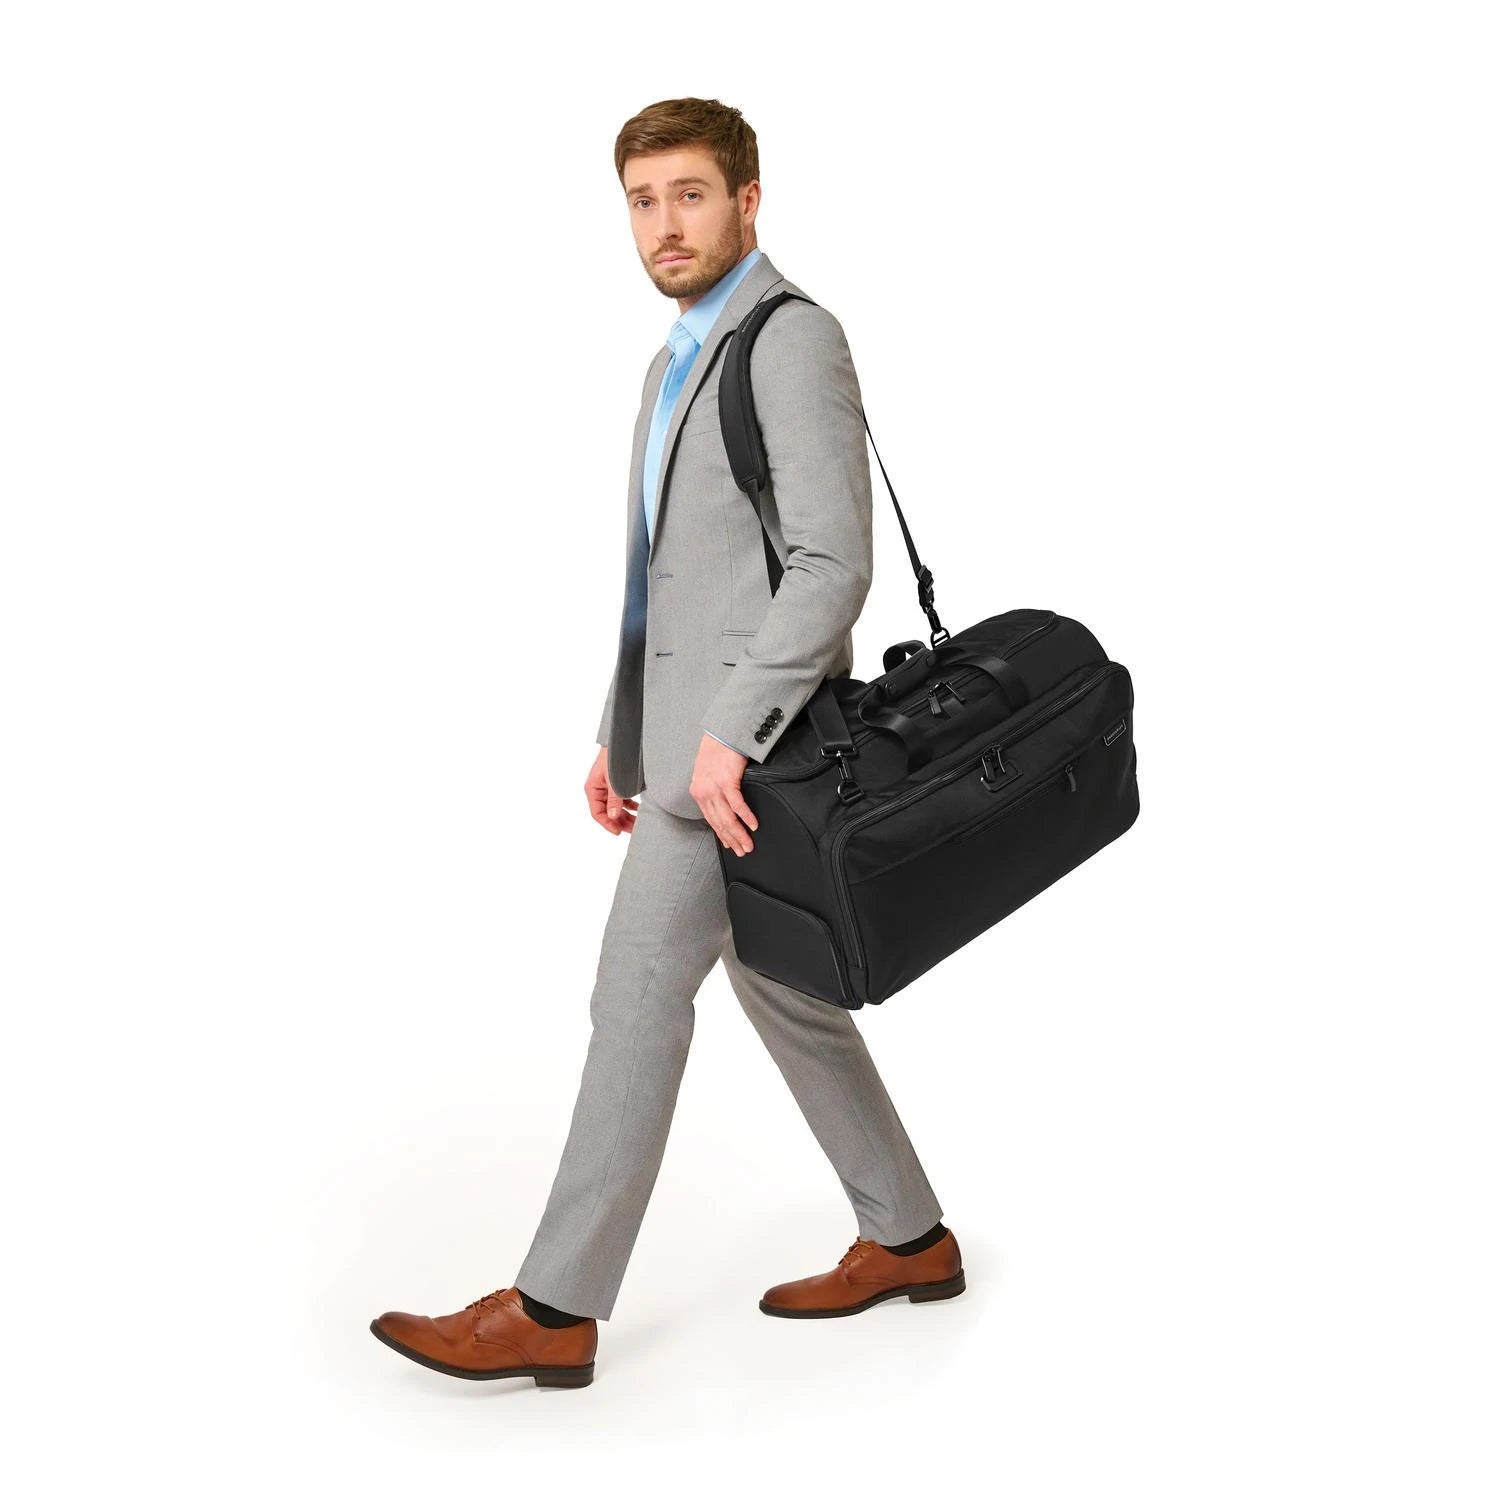 Briggs and Riley Baseline BL389 Classic Garment Bag | Altman Luggage